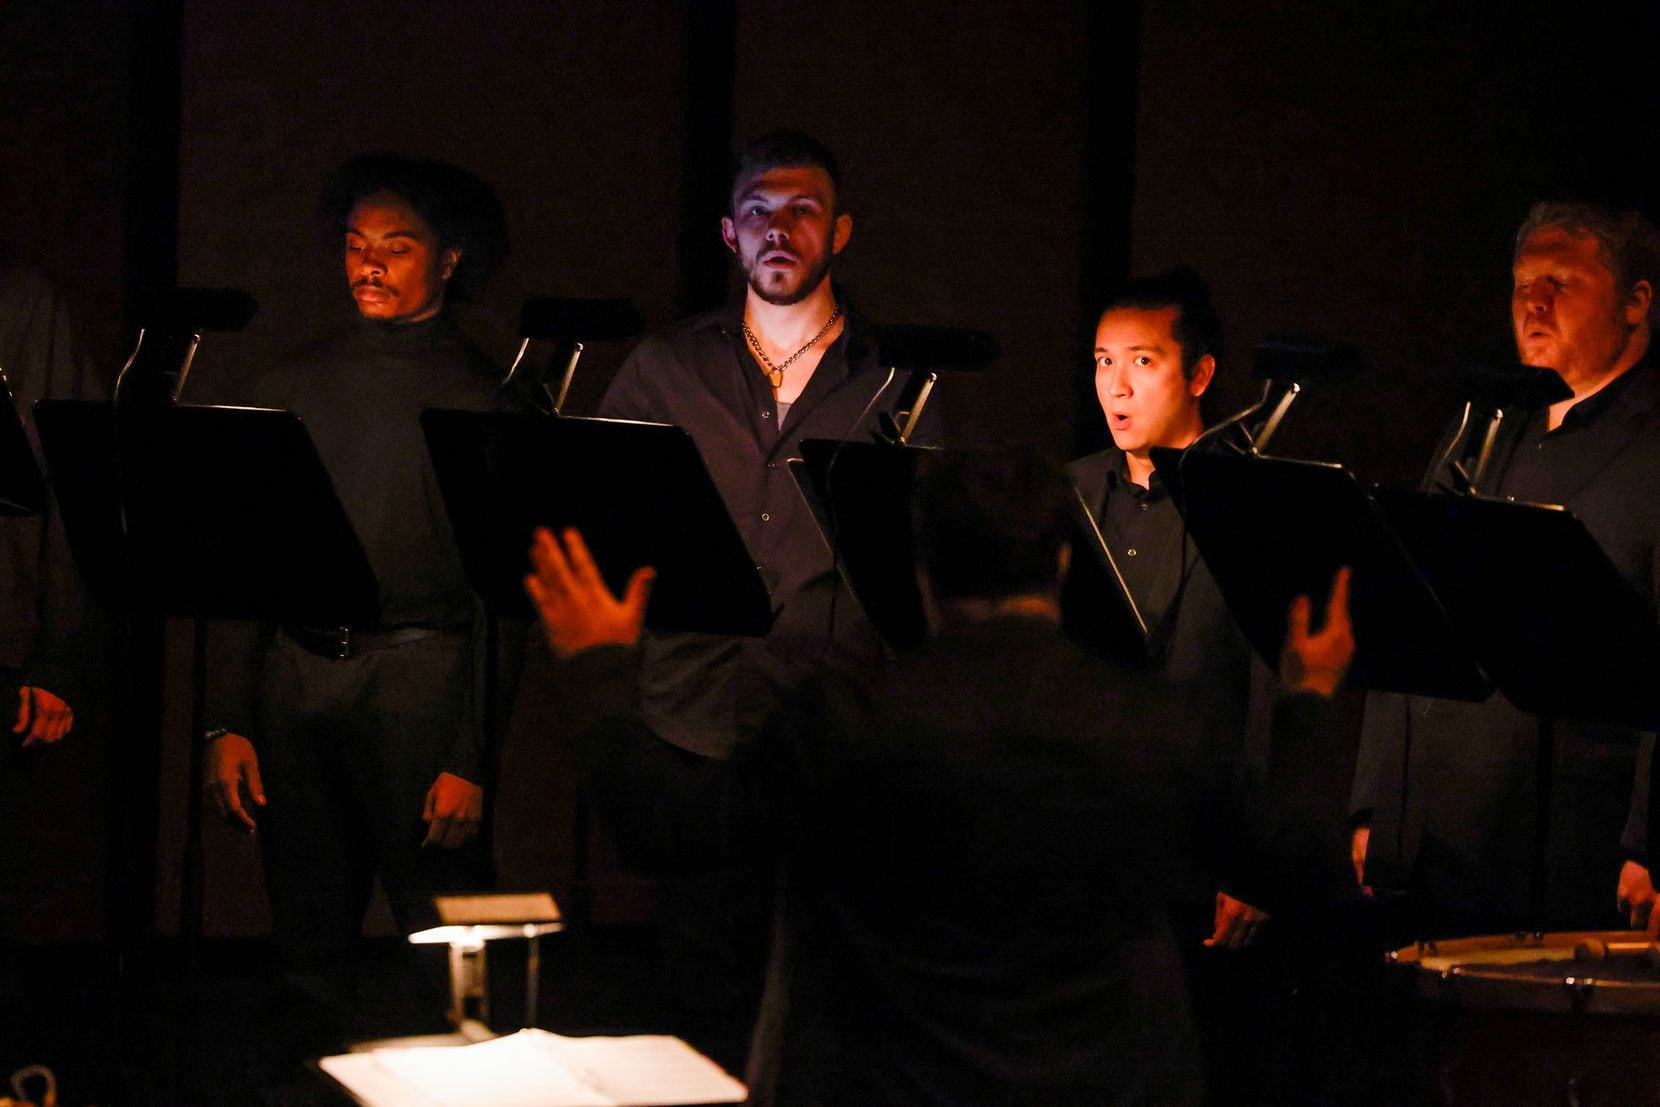 Verdigris, Dallas’ innovative choir, mixes AI and music in ‘Big Bang’ concert